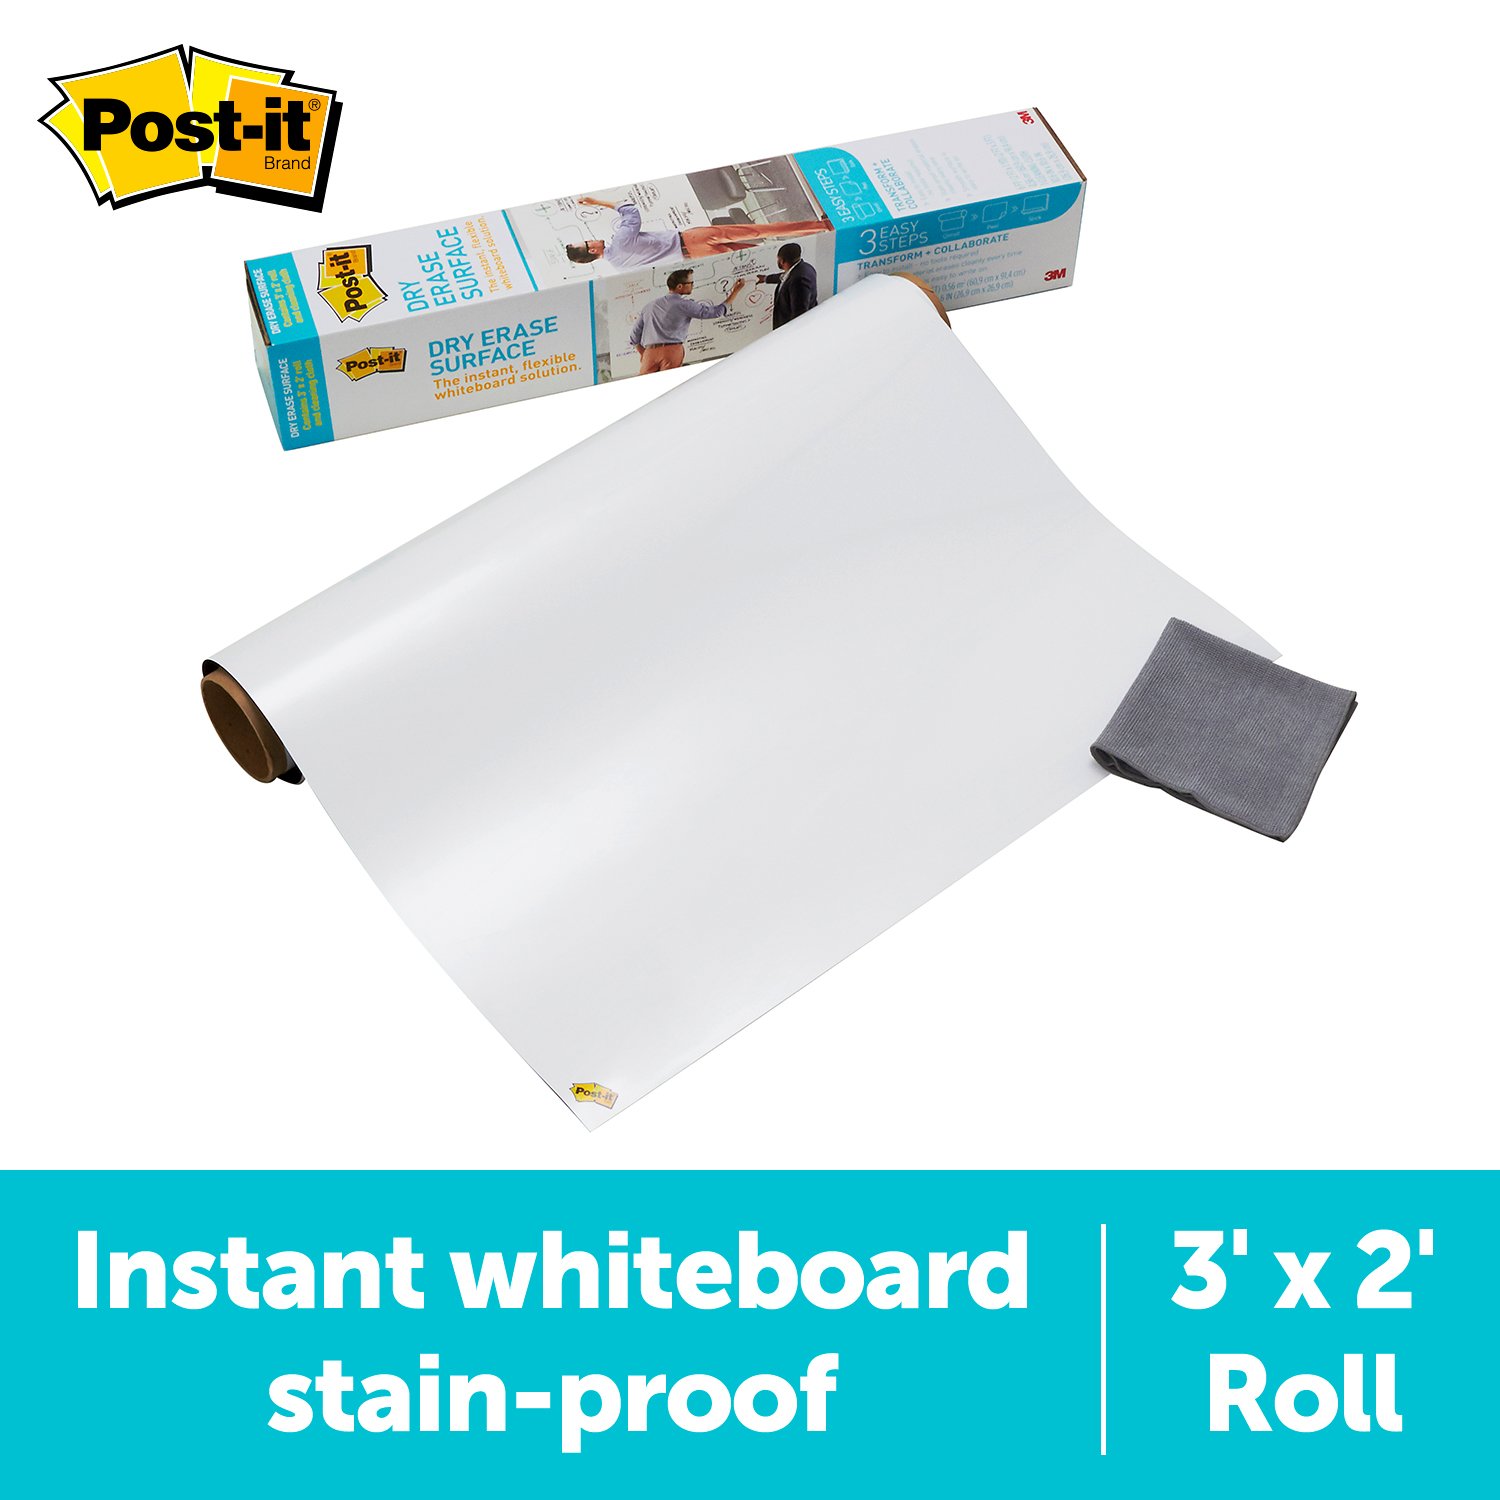 7100217882 - Post-it Super Sticky Dry Erase Surface DEF3x2, 2 ft x 3 ft (60.9 cm x 91.4 cm)